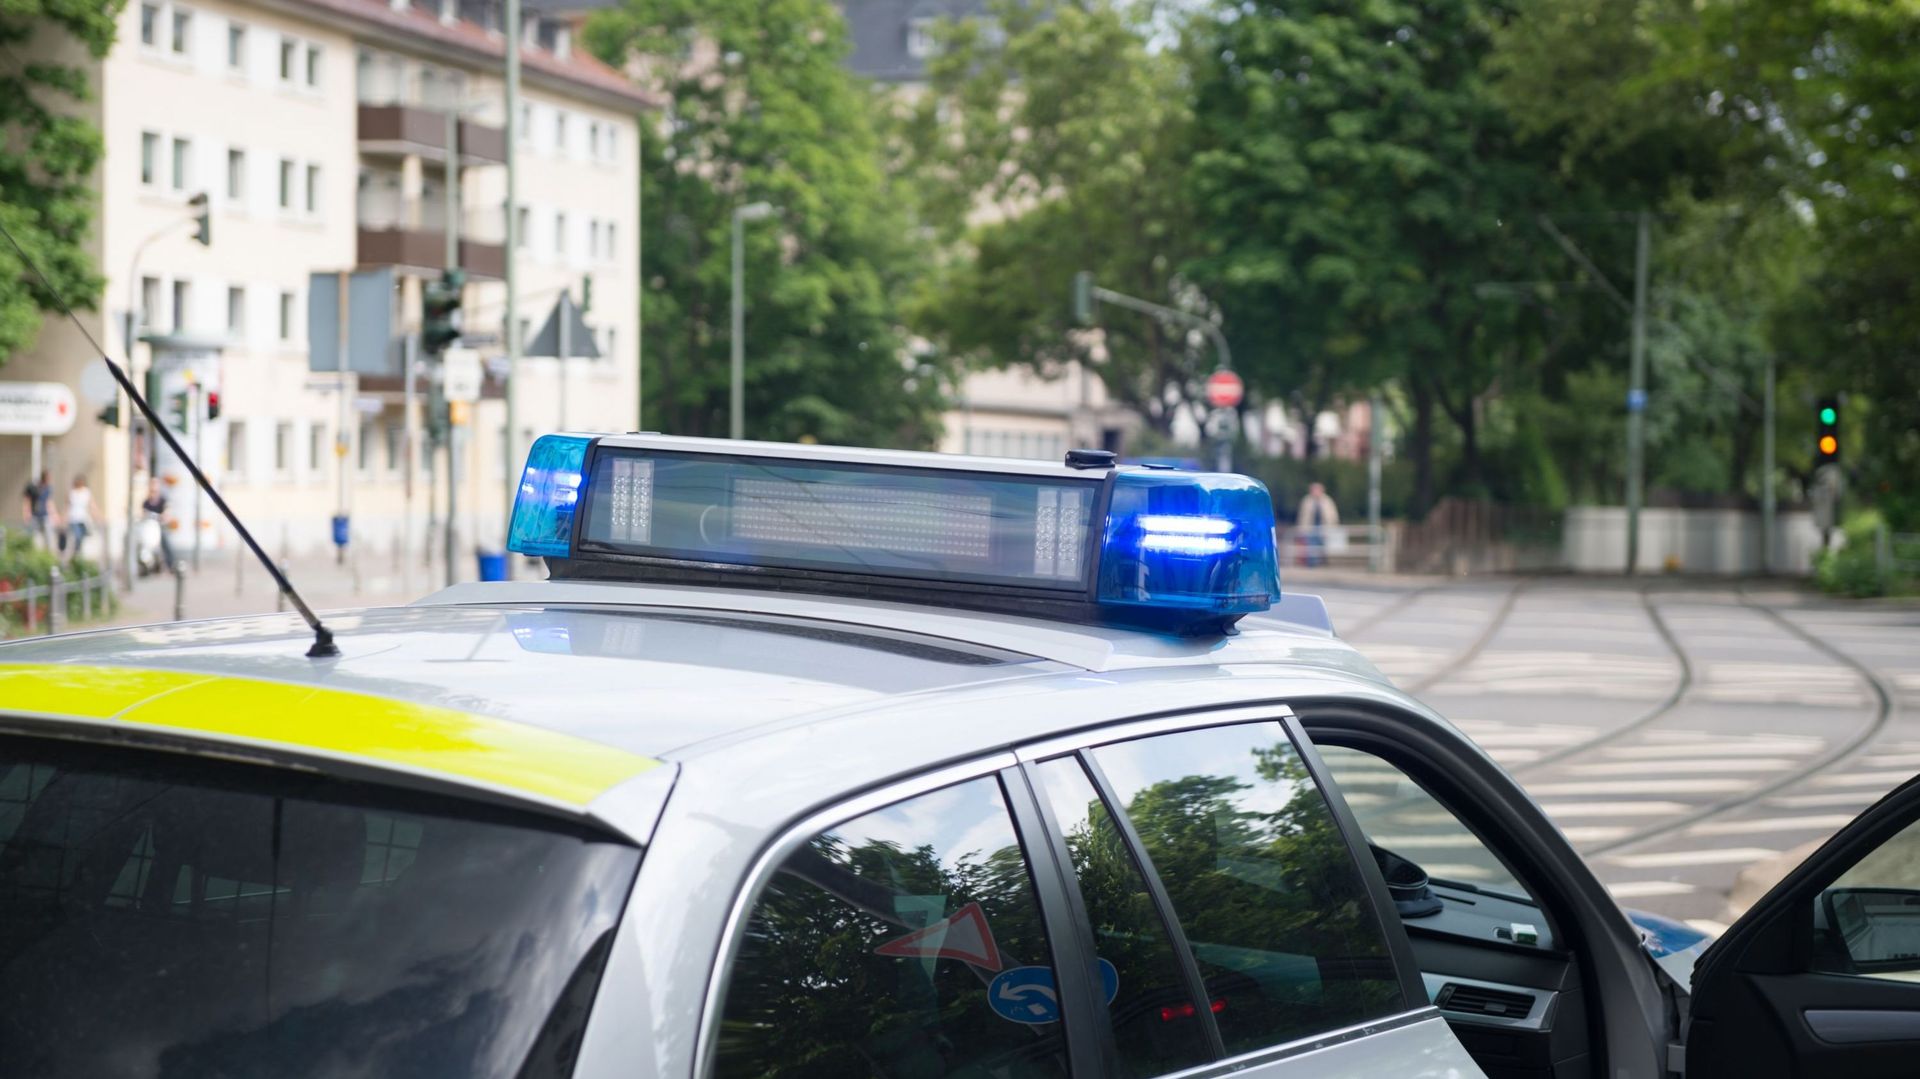 German Polizei police vehicle with siren lights flashing